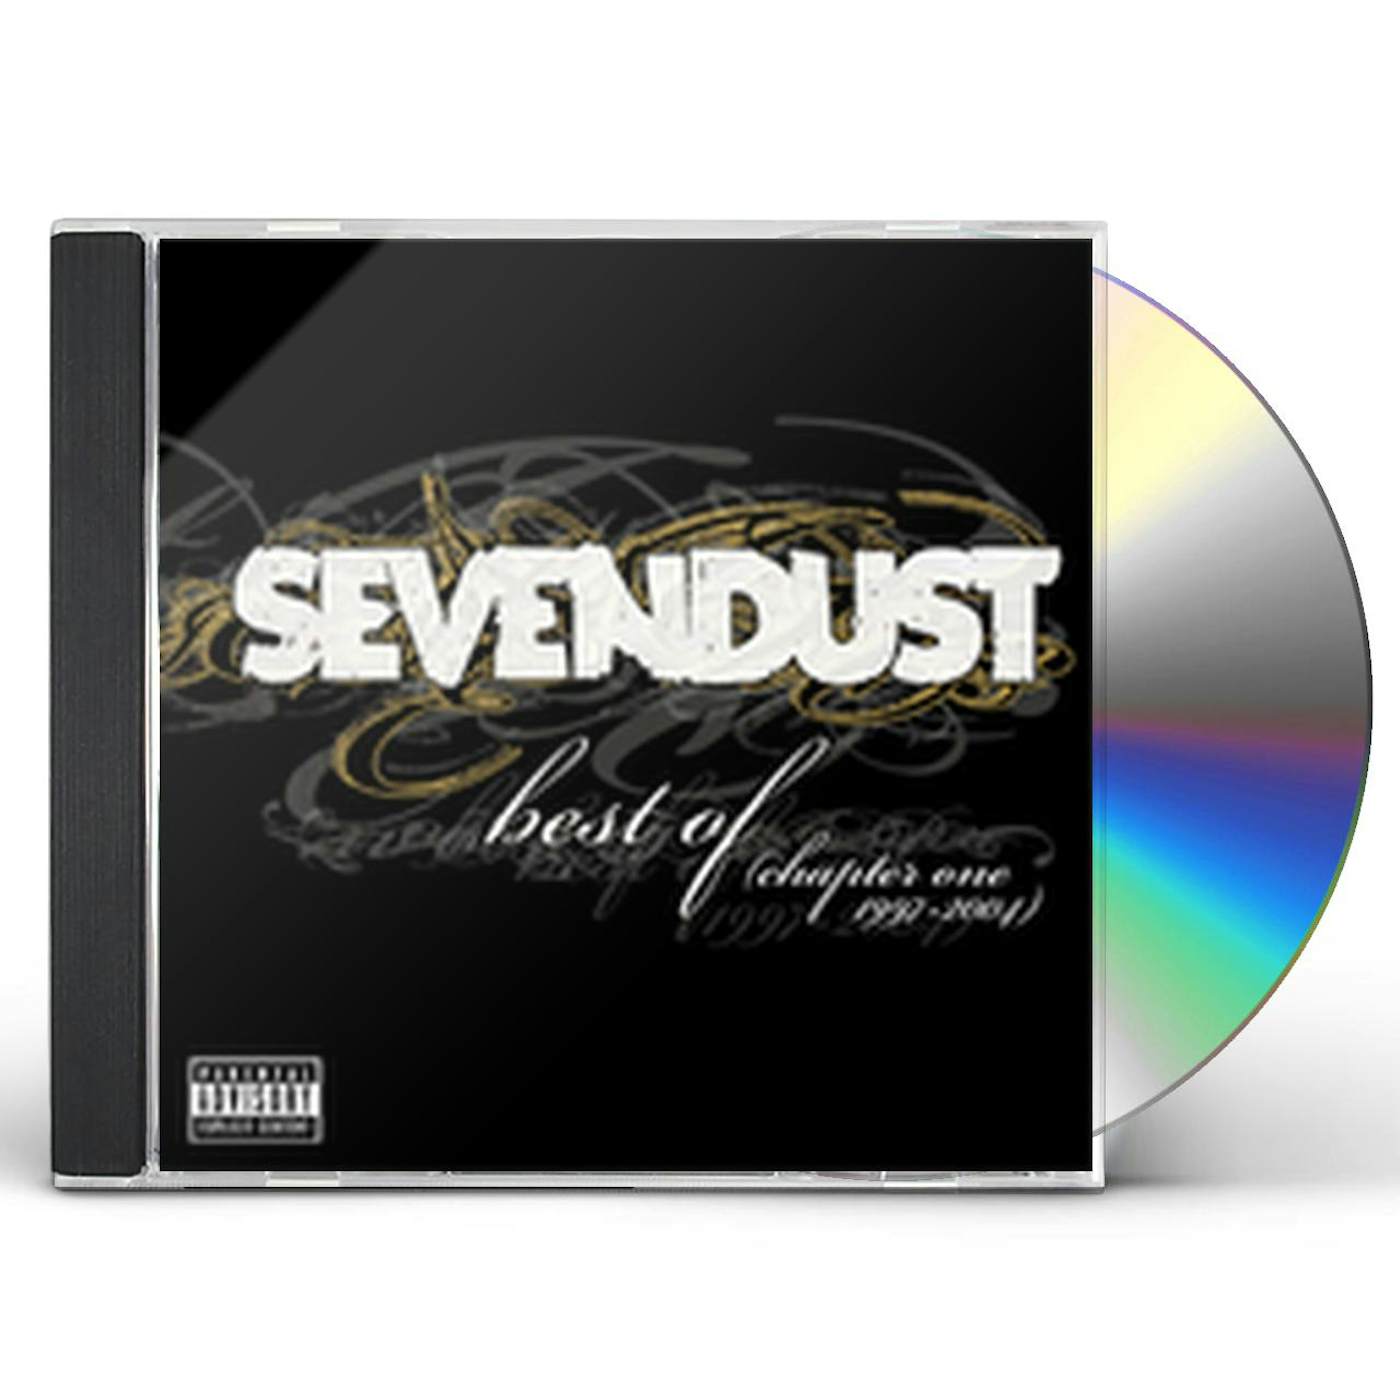 Sevendust BEST OF (CHAPTER ONE 1997-2004) CD